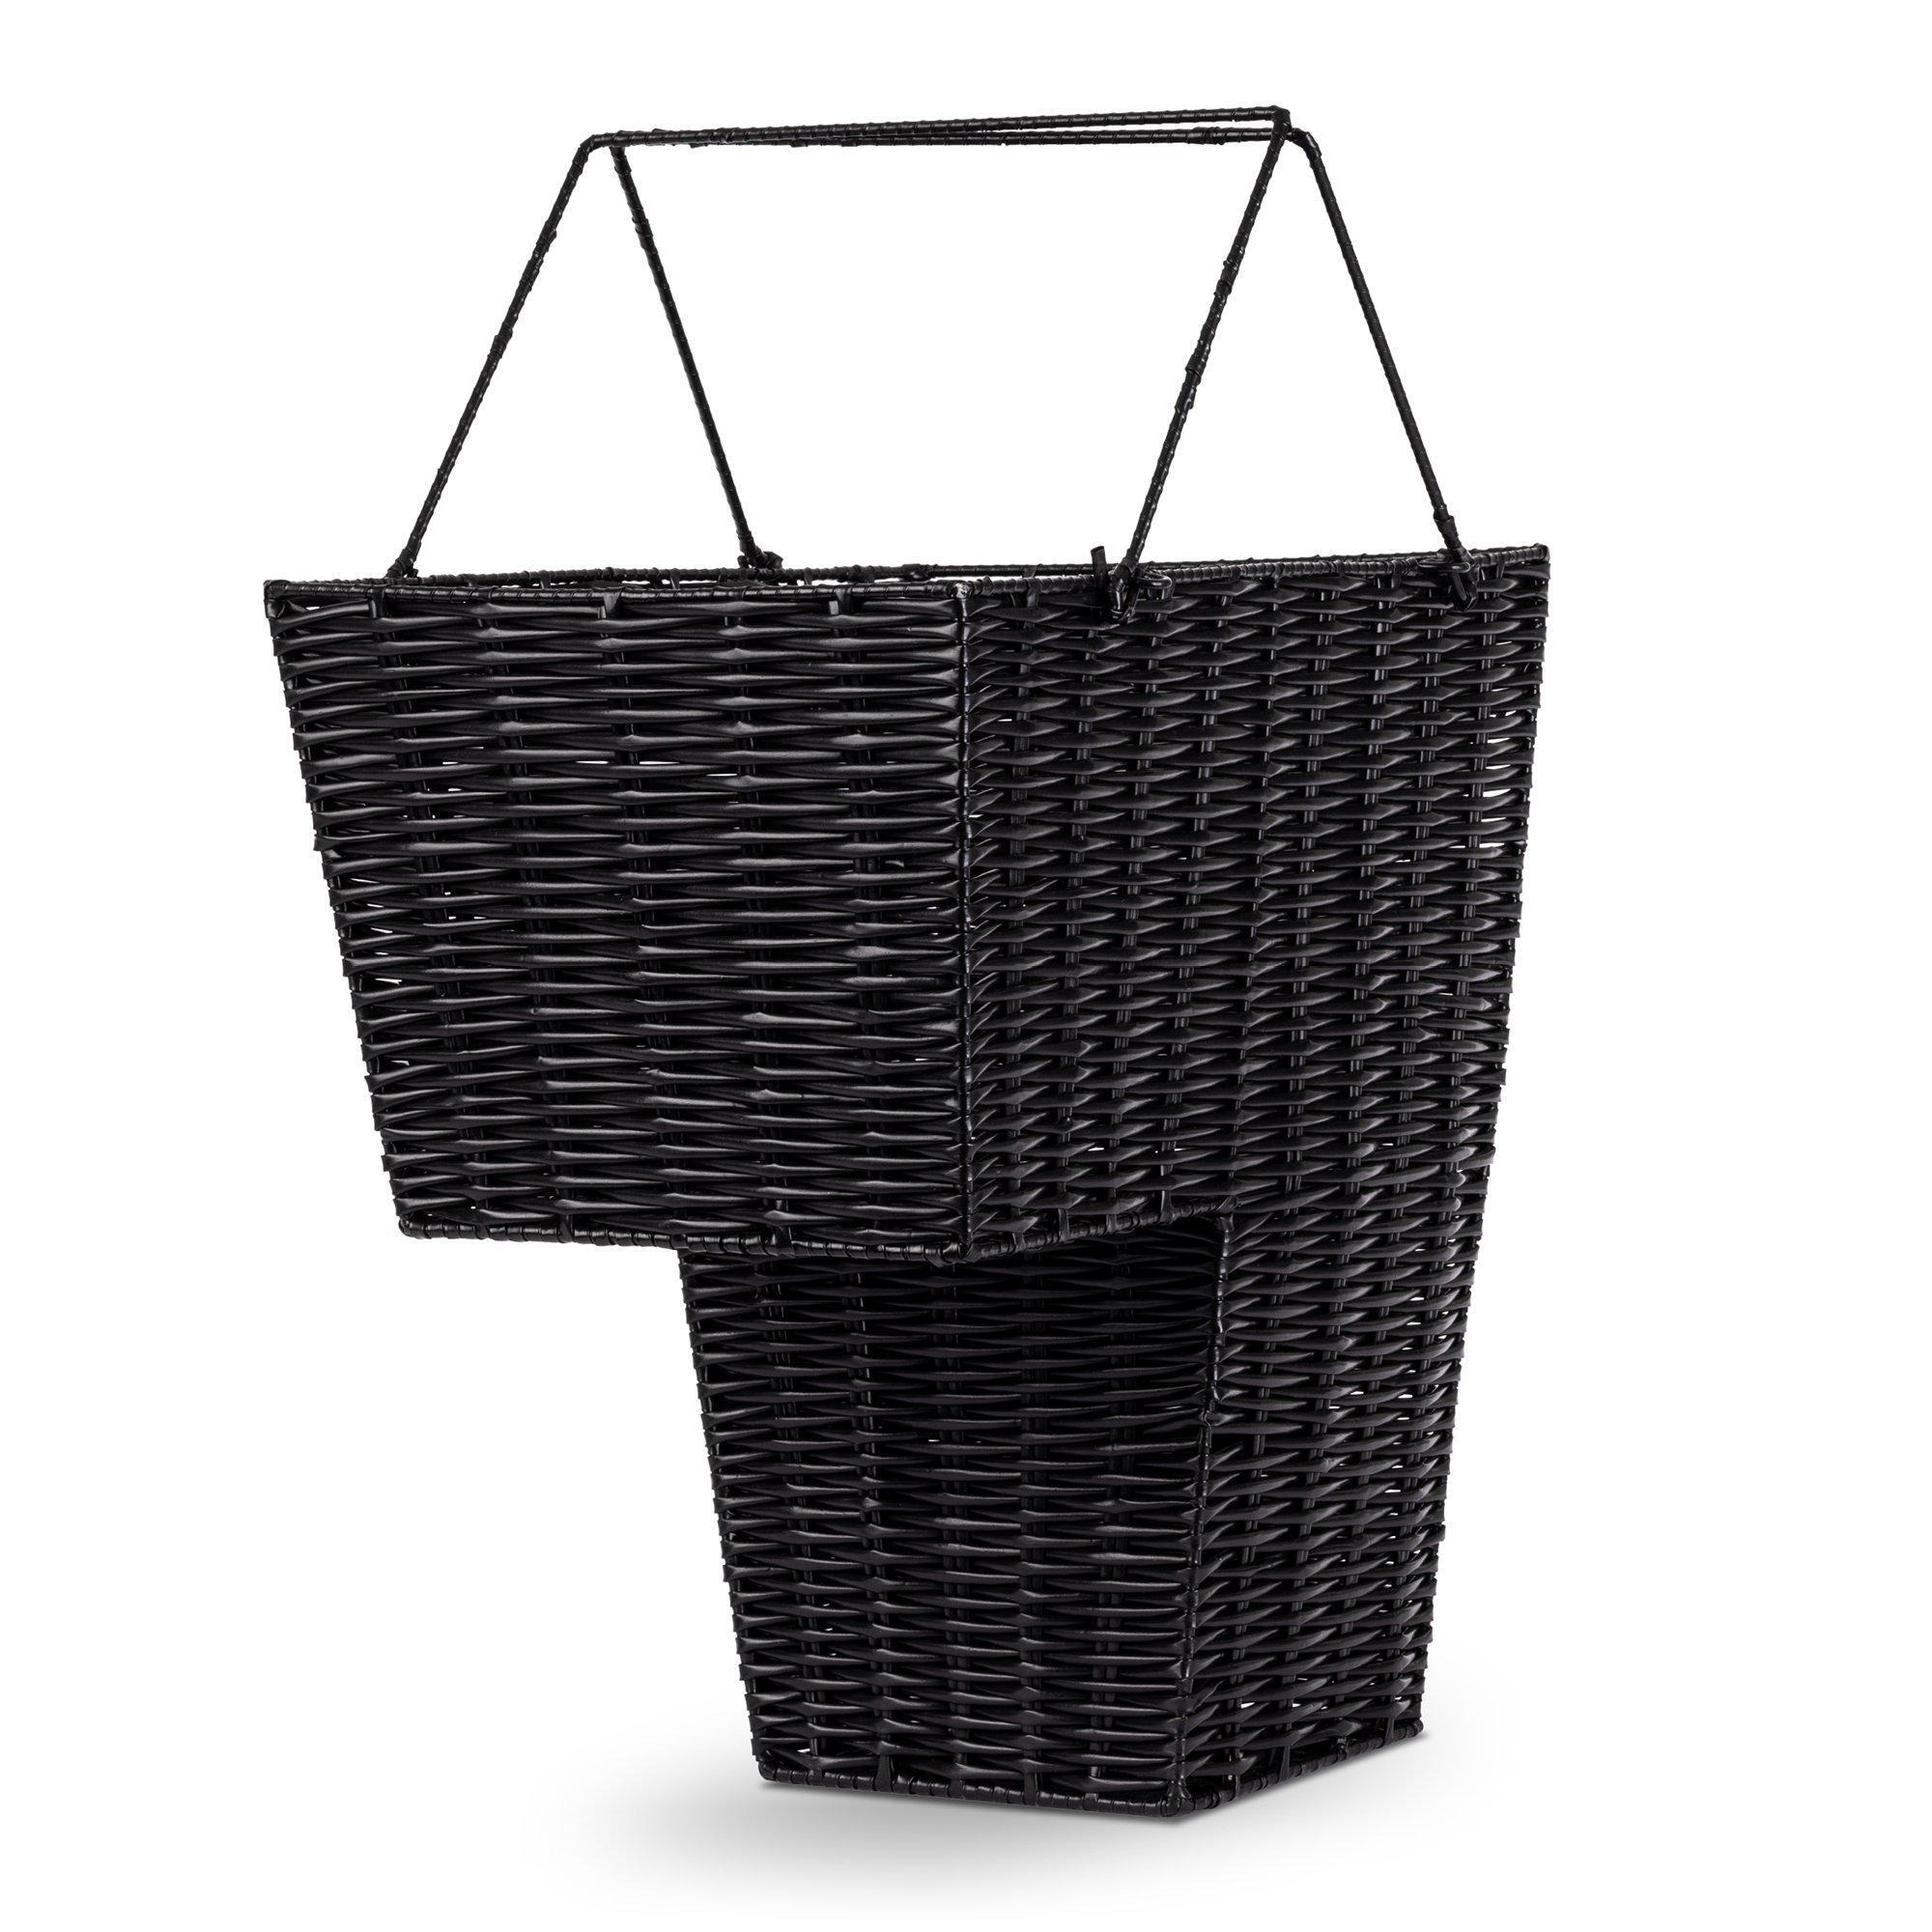 Natural Woven Wicker Resin Stair Basket - Versatile Storage Organiser - image 1